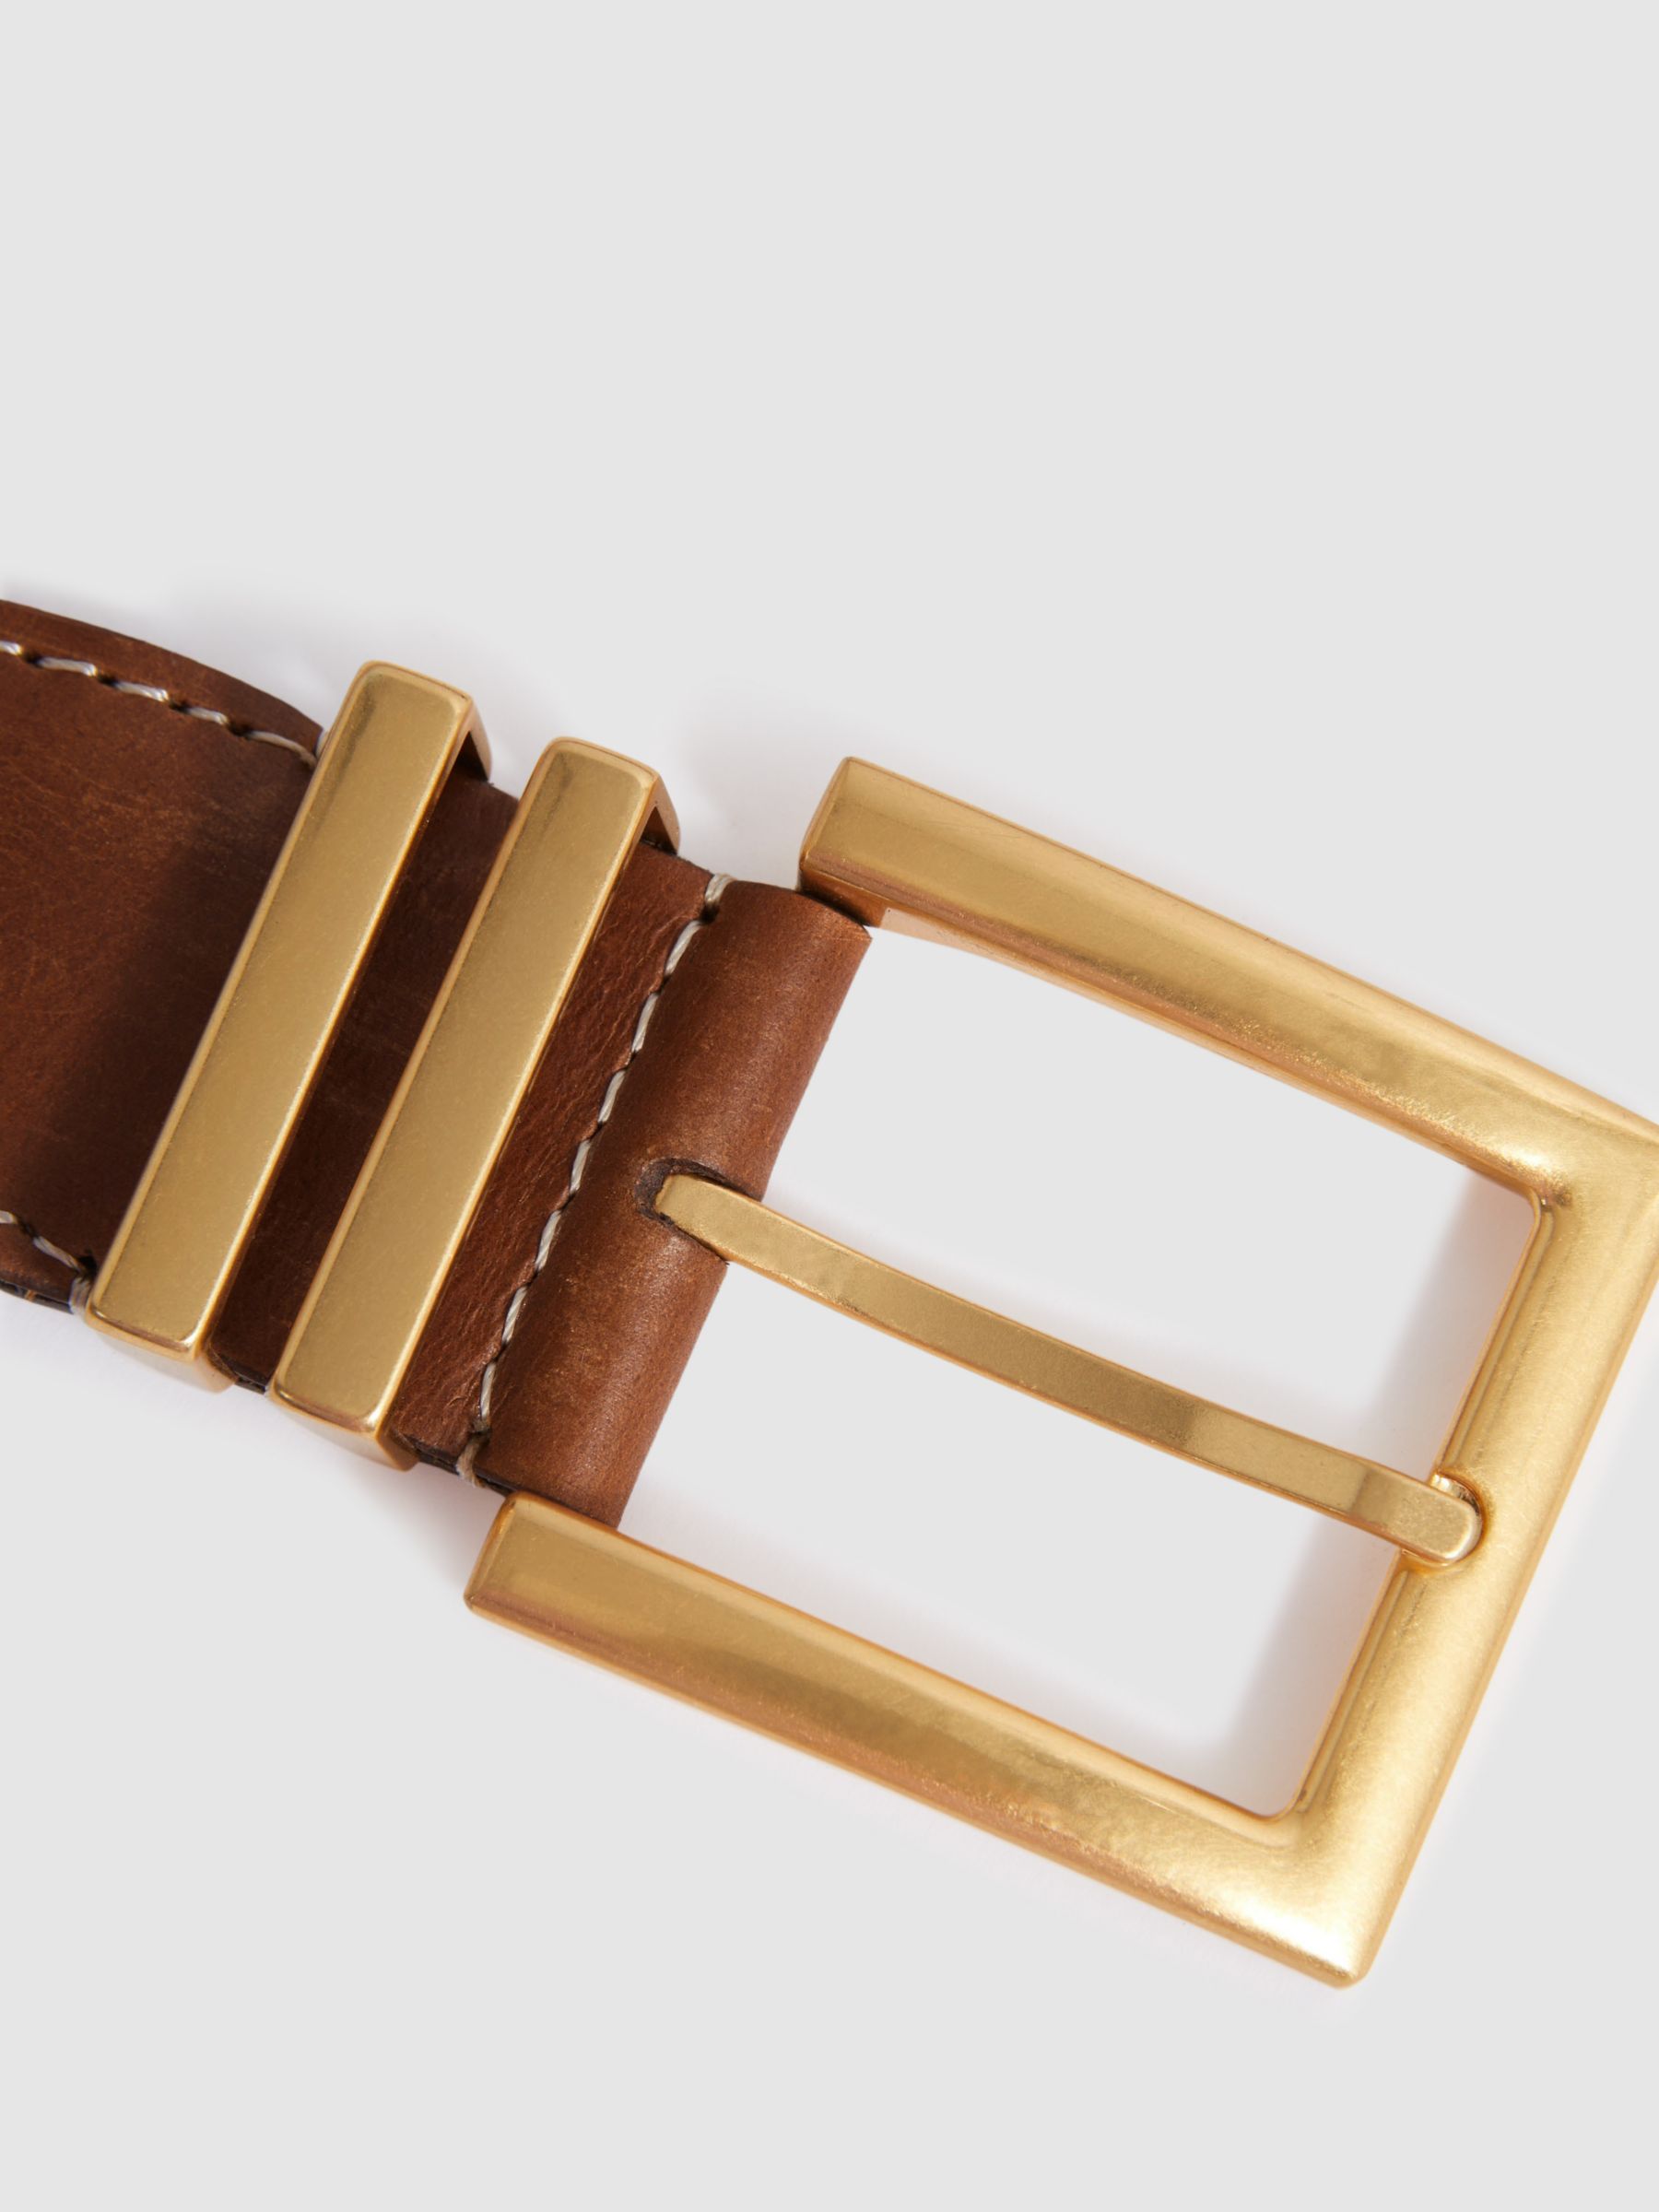 Reiss Brompton Textured Leather Belt, Tan, S-M